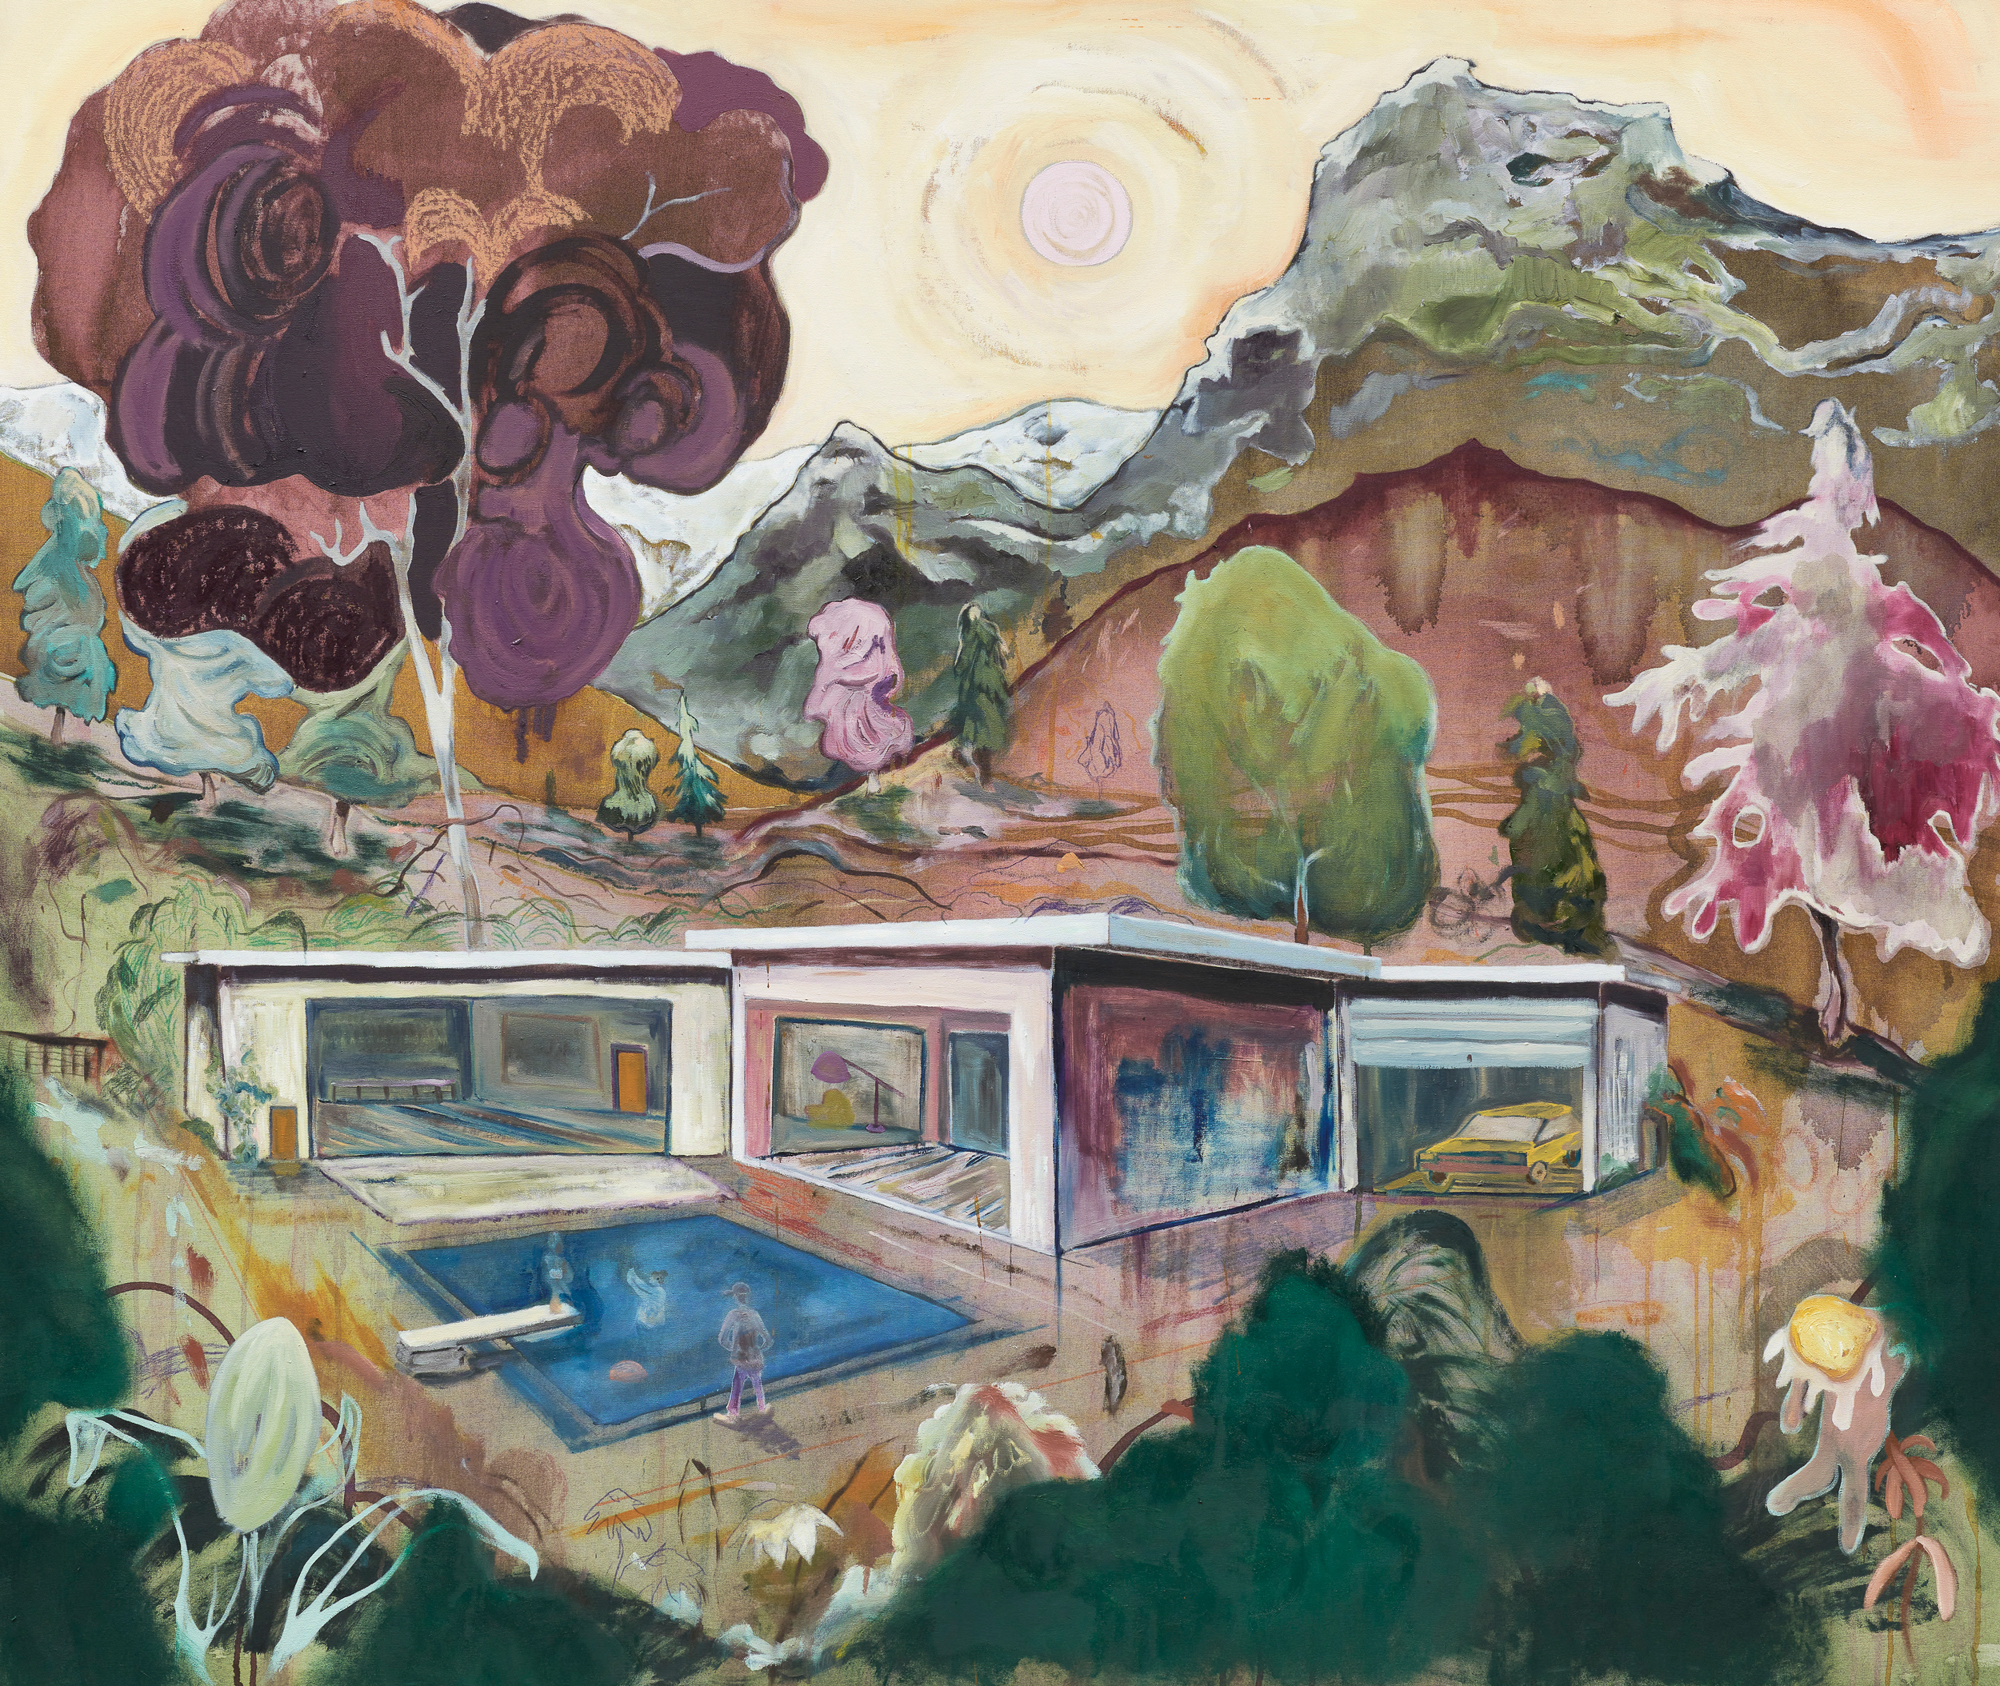 Summerhouse Memories, 2020, mixed media on canvas, 130 x 155 cm